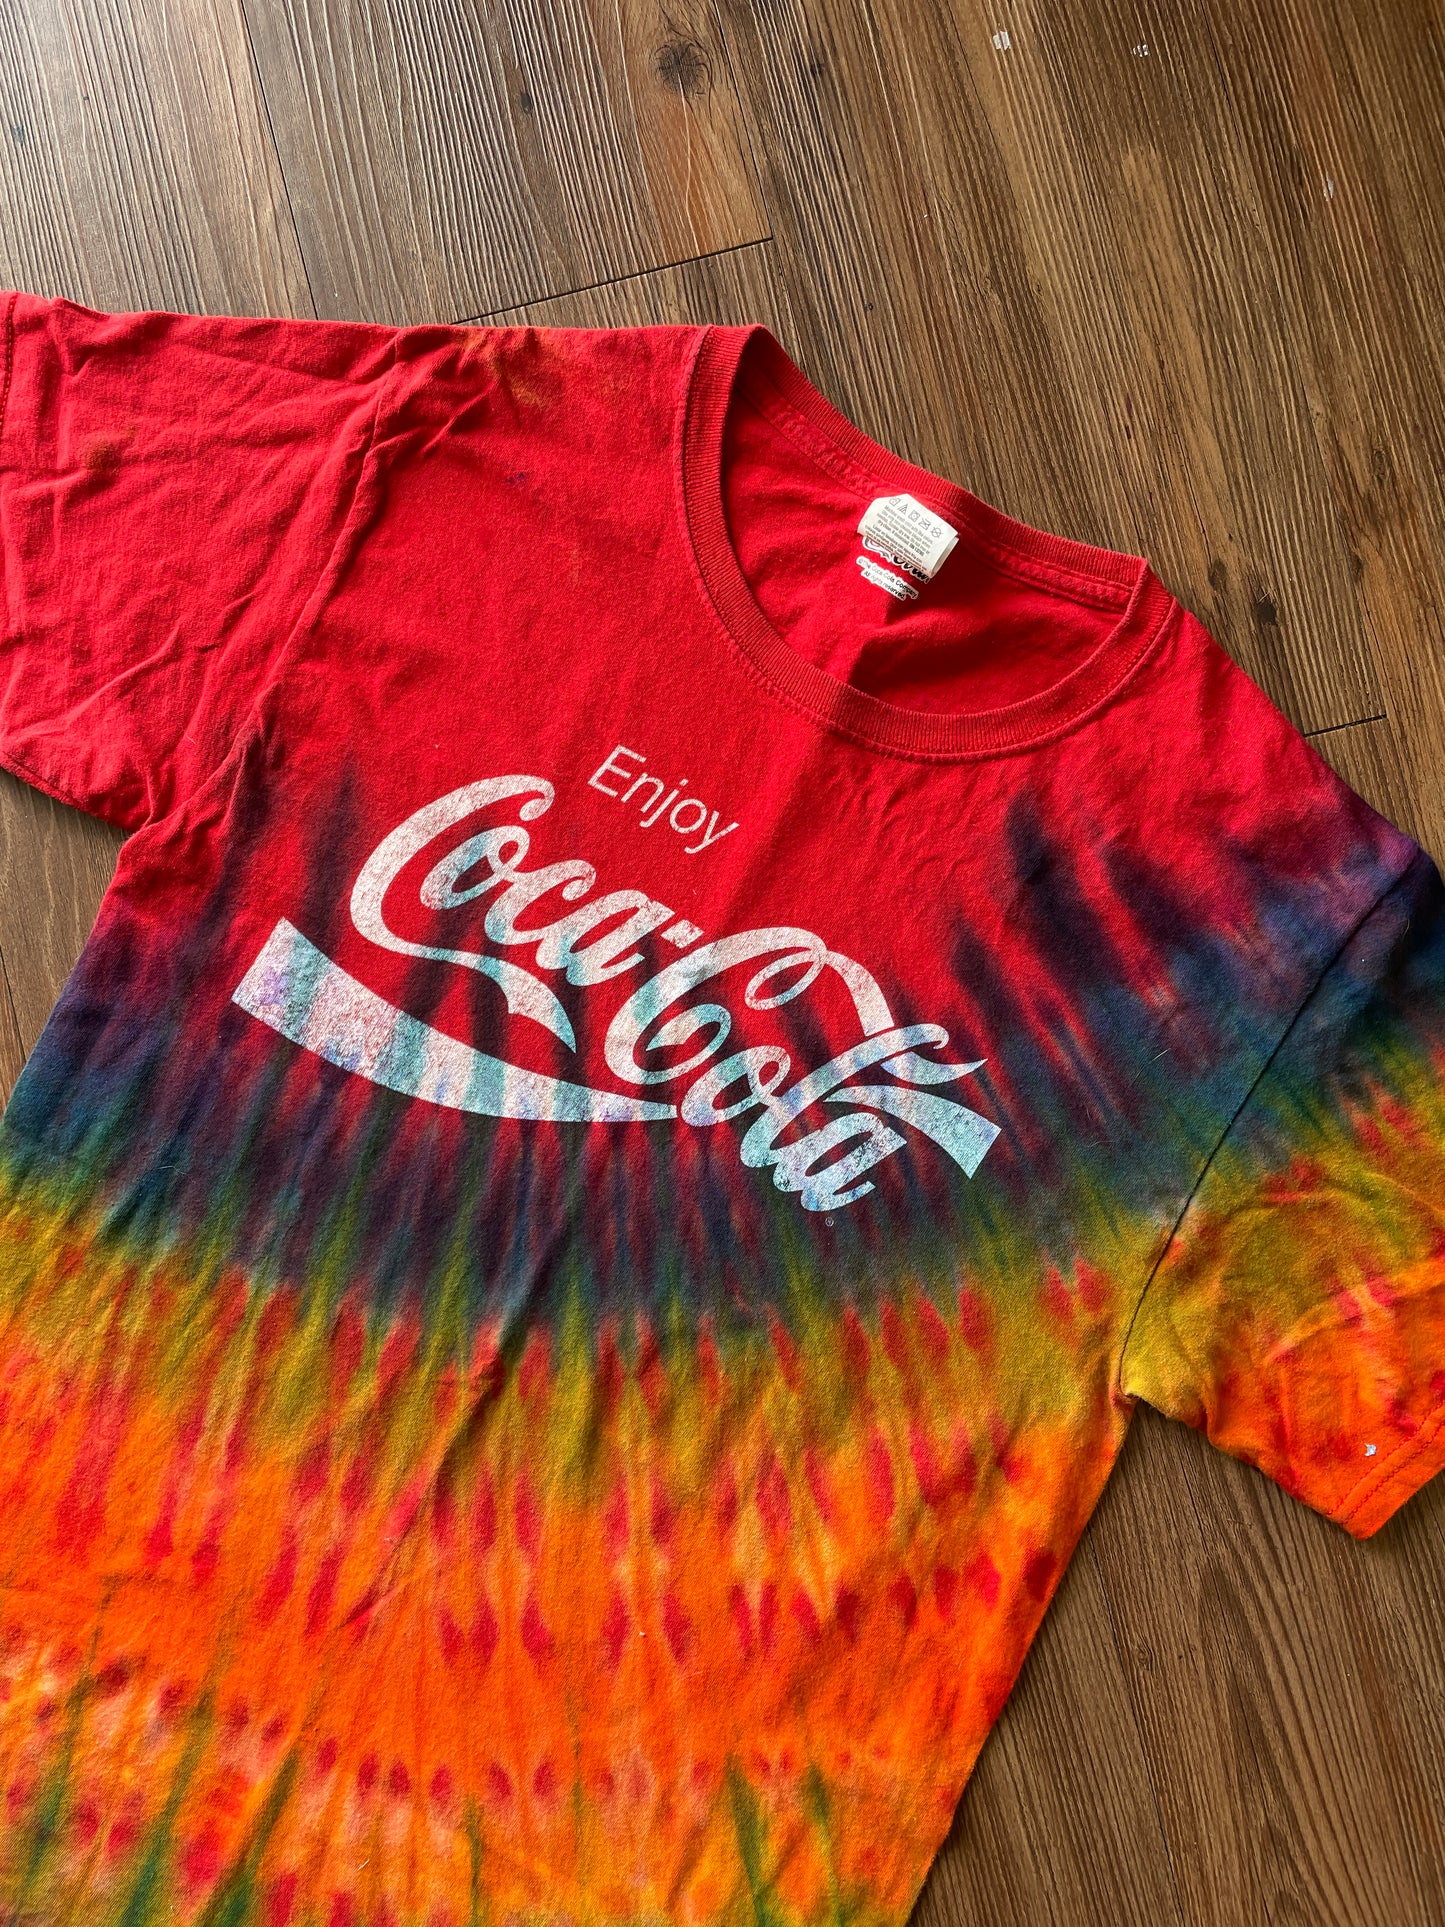 SMALL Men’s Coca-Cola Rainbow Tie Dye T-Shirt | Red and Rainbow Reverse Tie Dye Short Sleeve